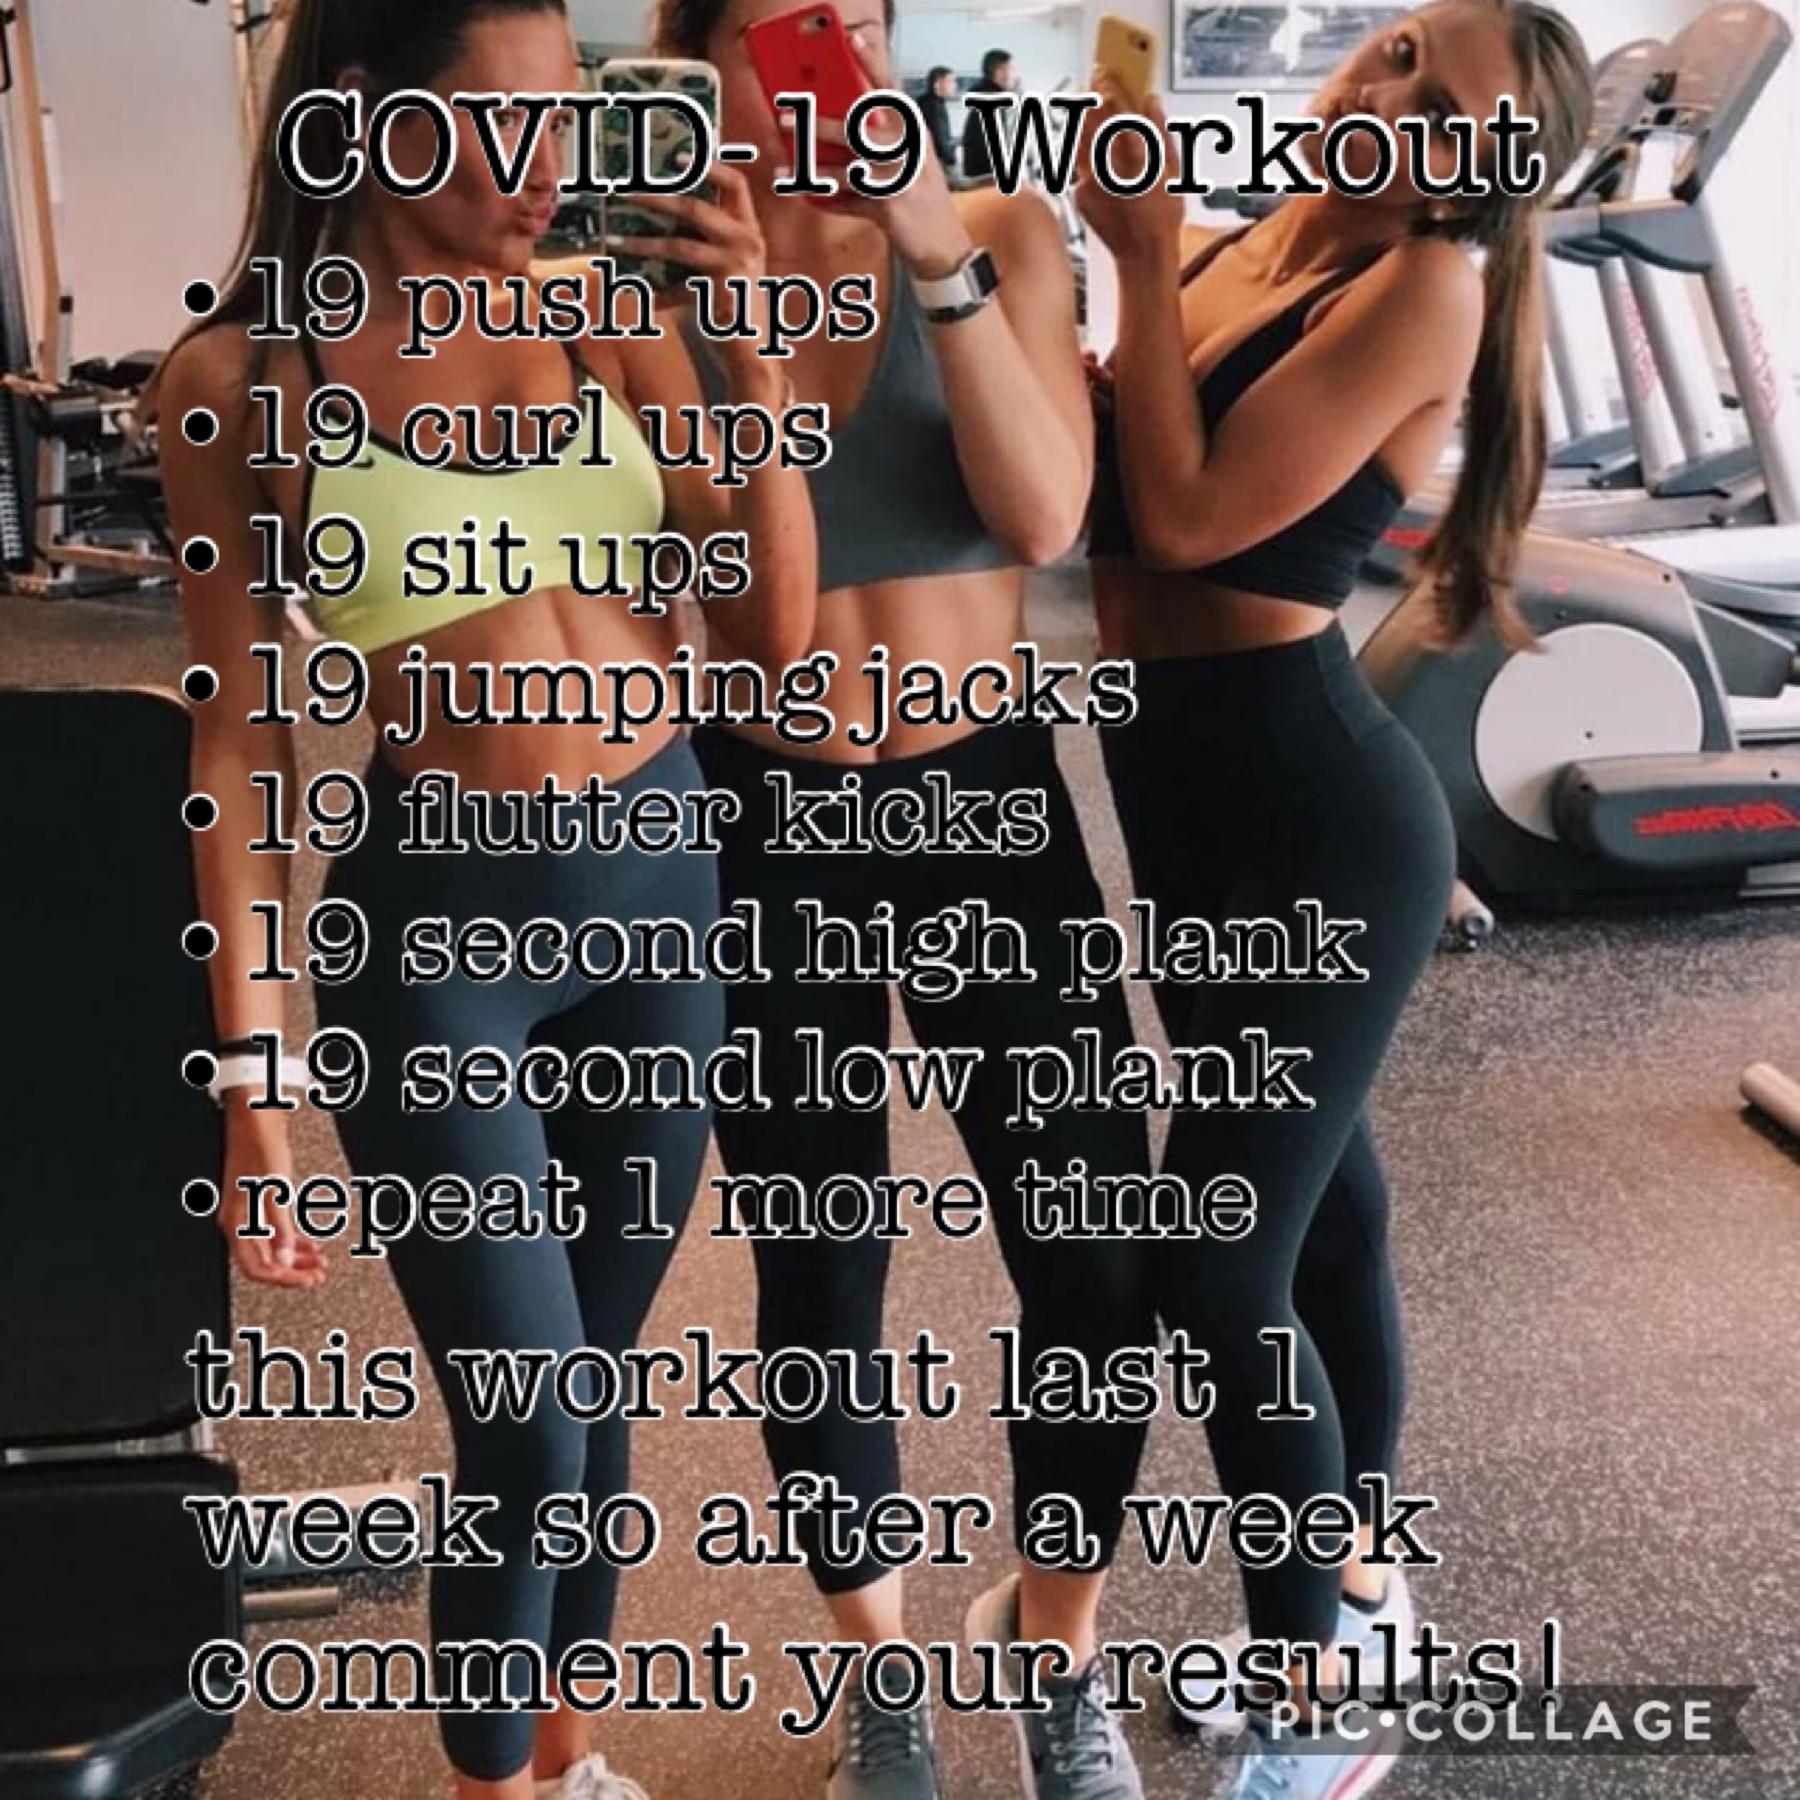 COVID-19 Workout